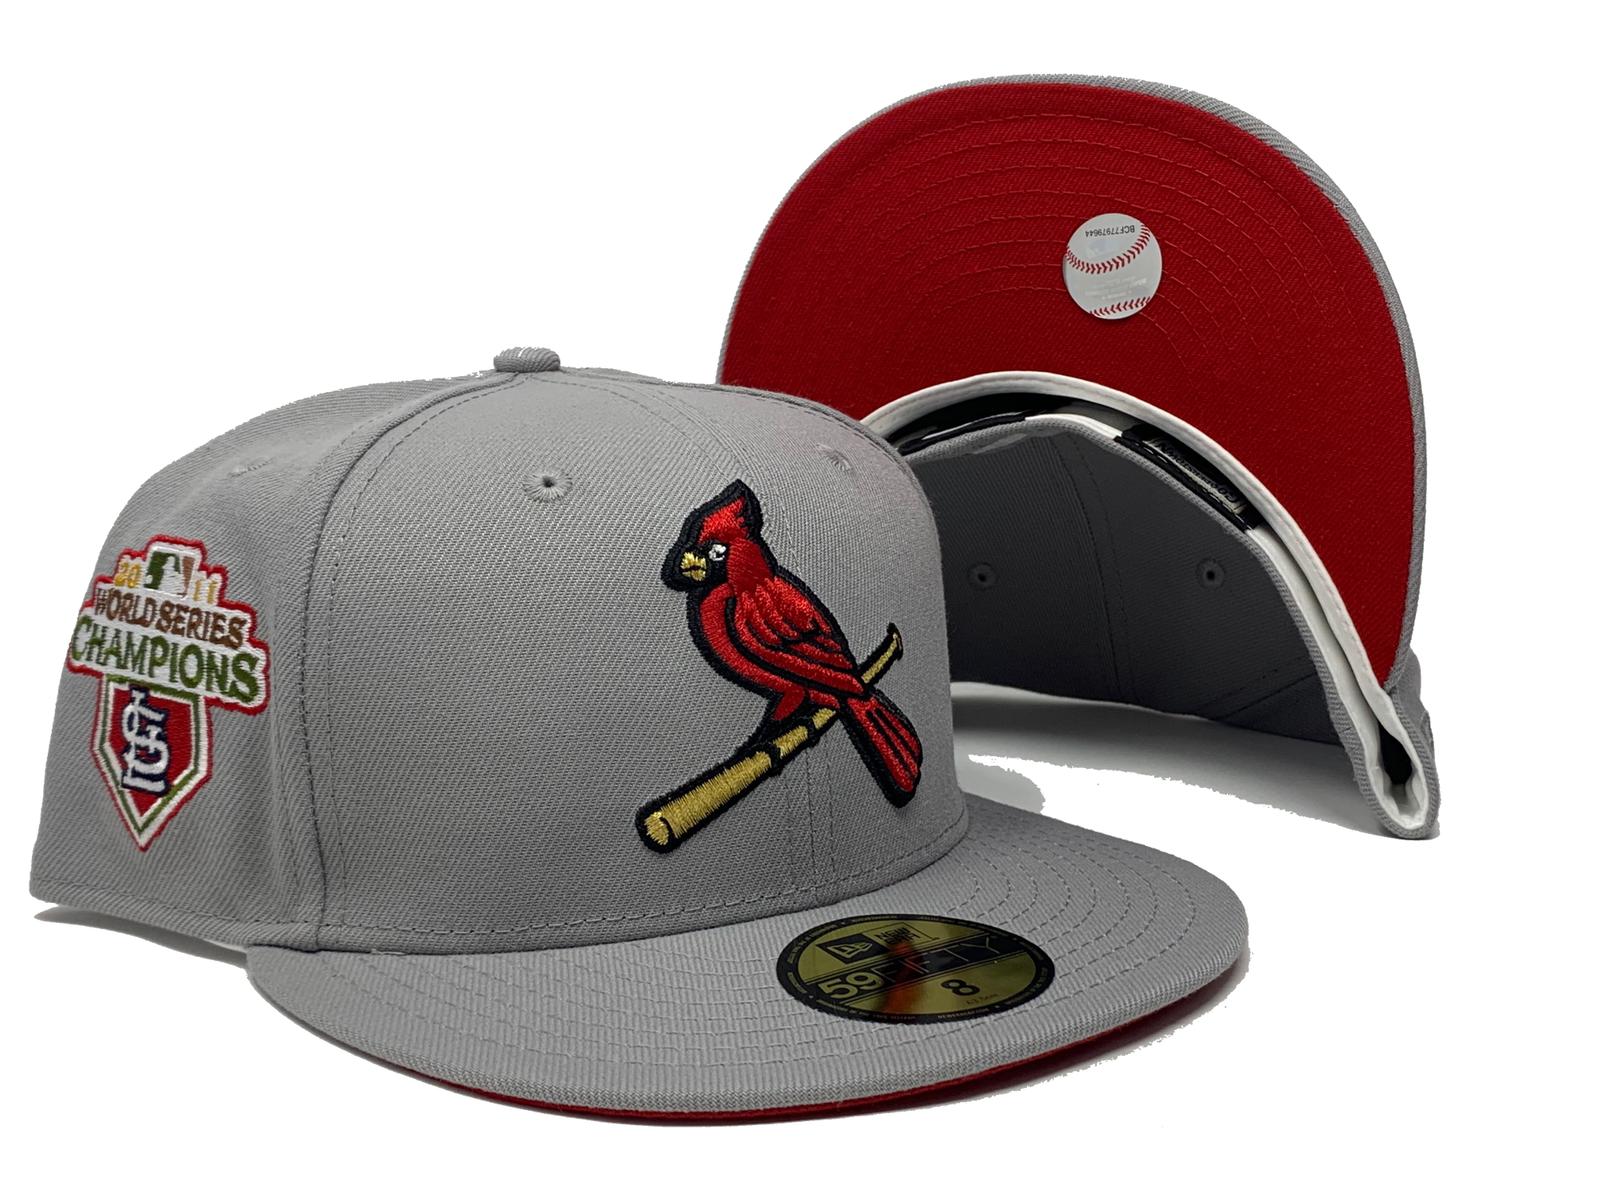 Accessories, 211 World Series Champion Stl Cardinals